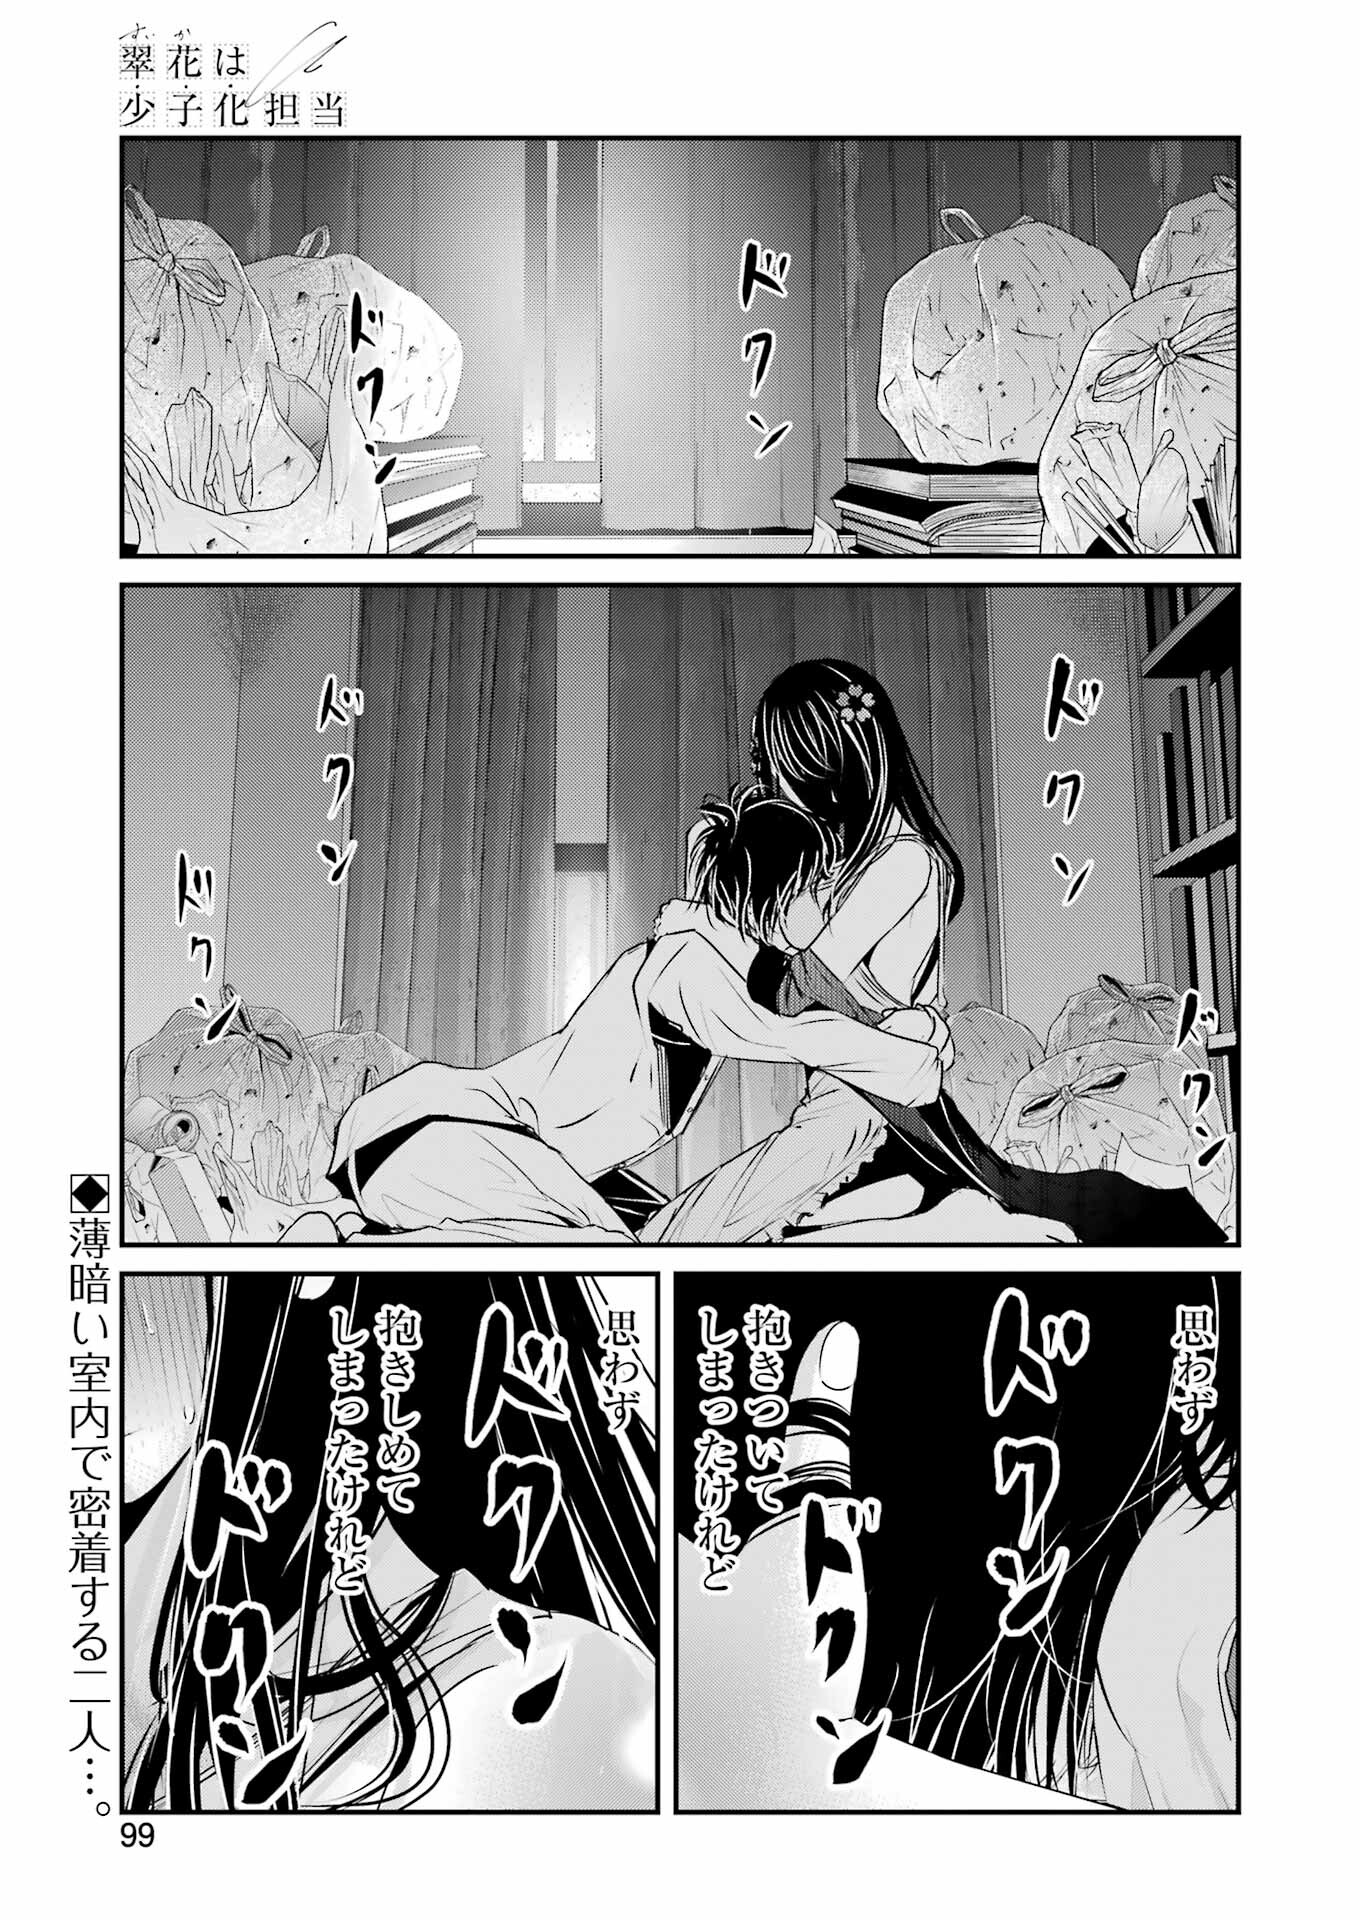 Suika wa Shoushika Tantou - Chapter 8 - Page 1